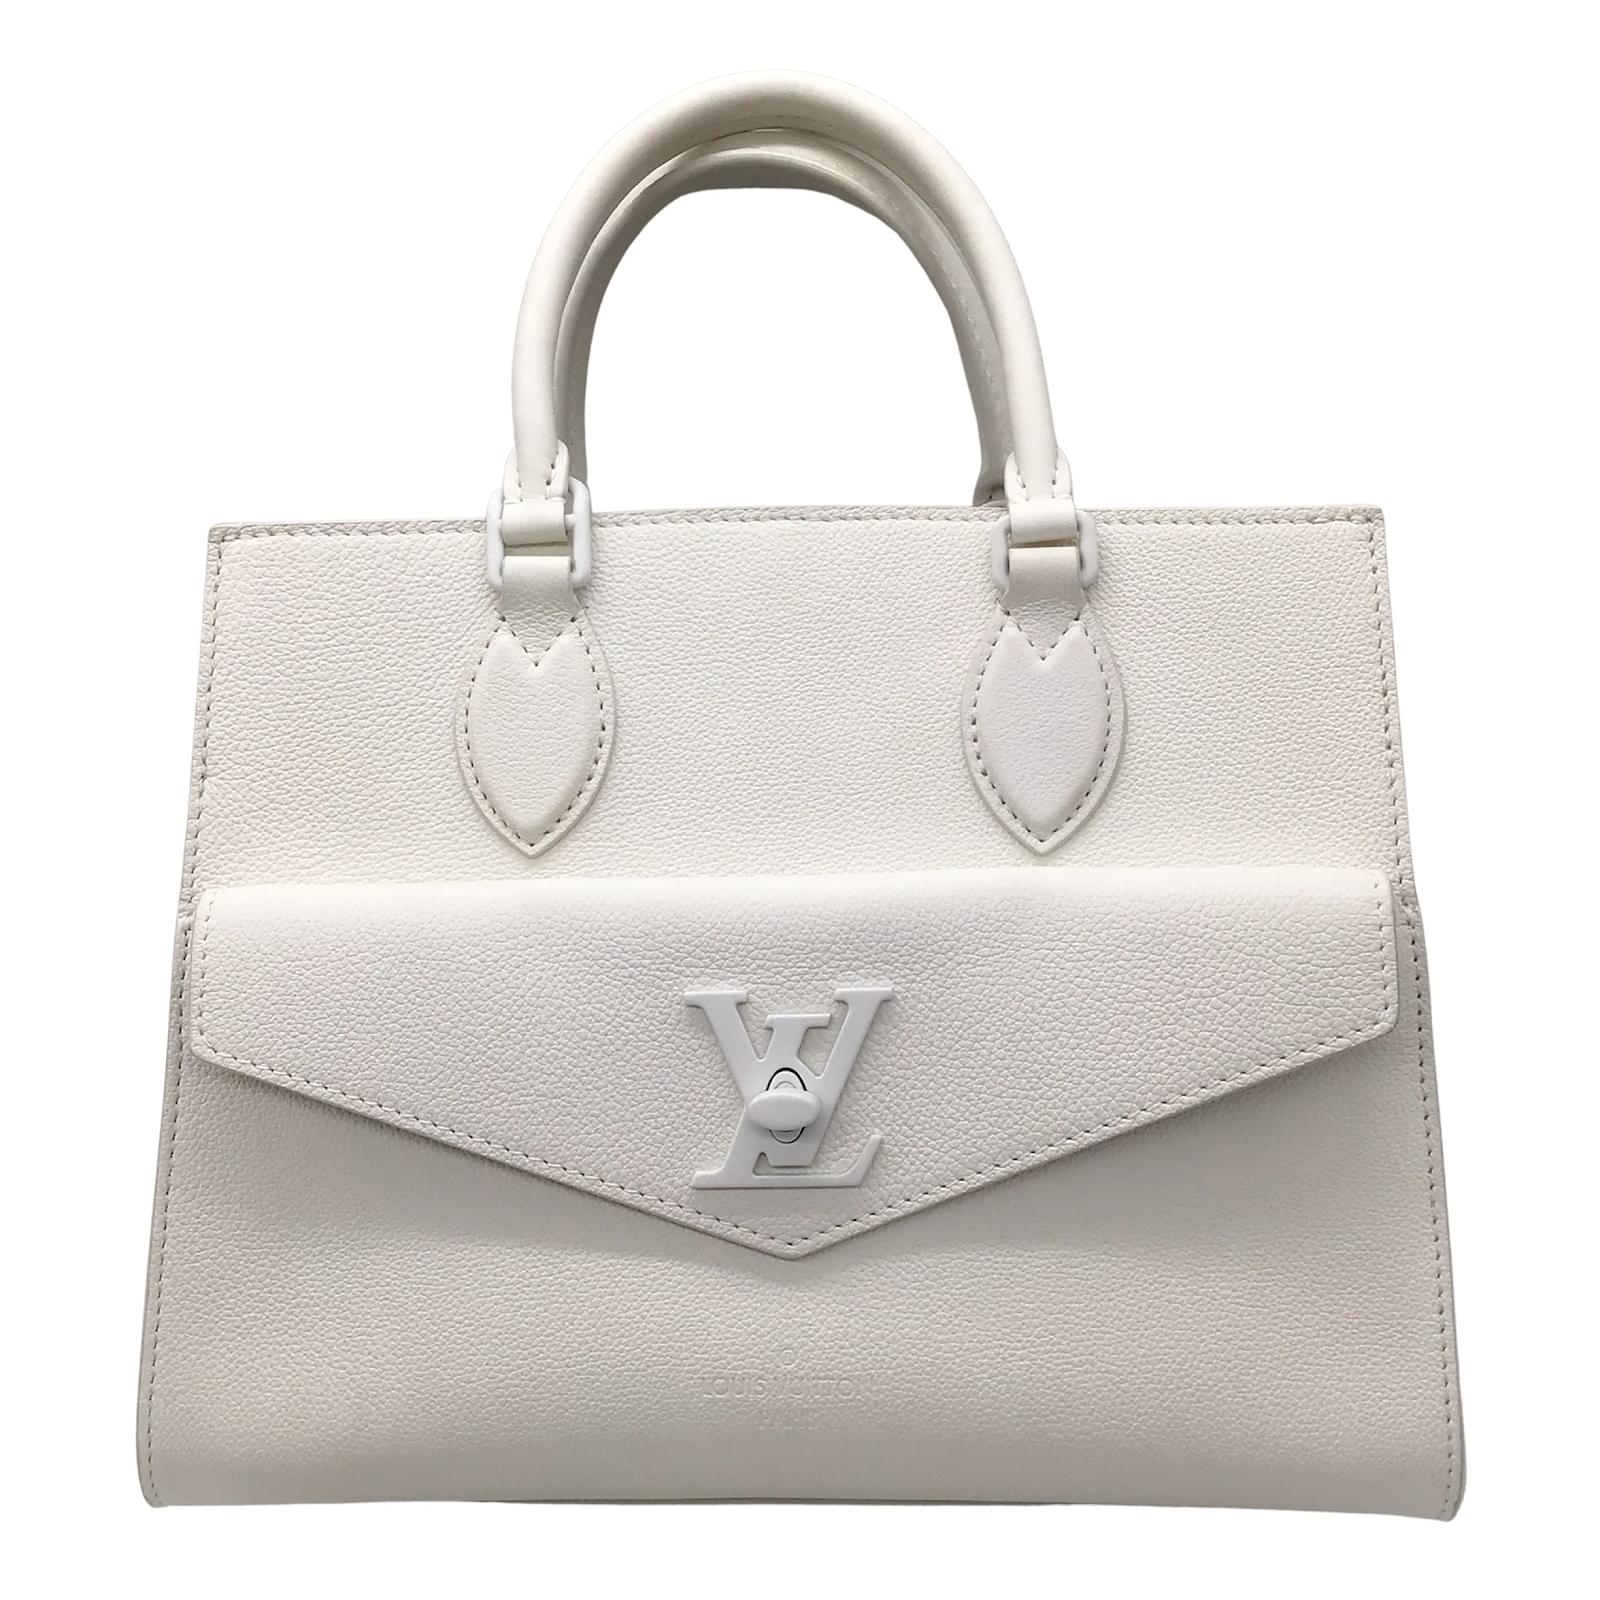 Louis Vuitton Lockme Monochrome PM Leather Tote Handbag